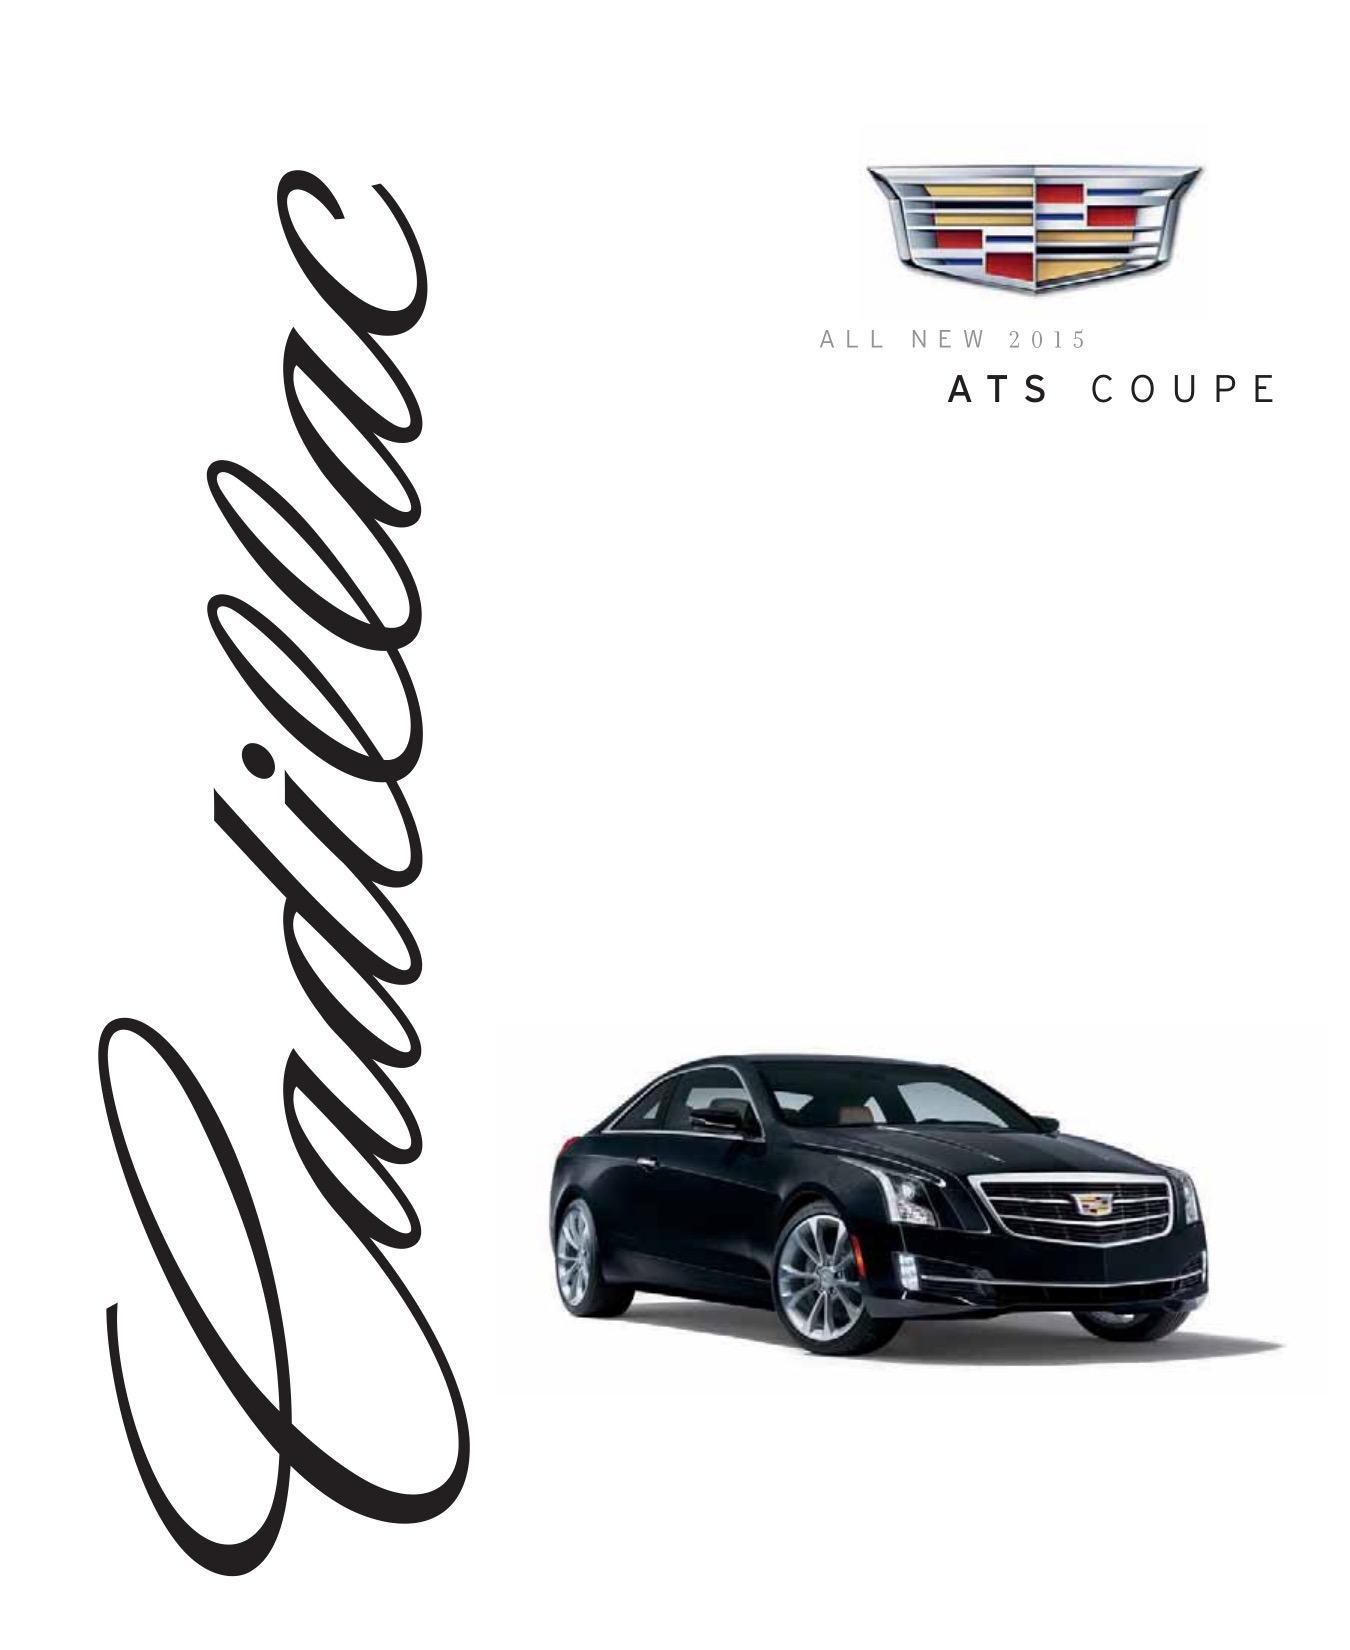 2015 Cadillac ATS Coupe Brochure